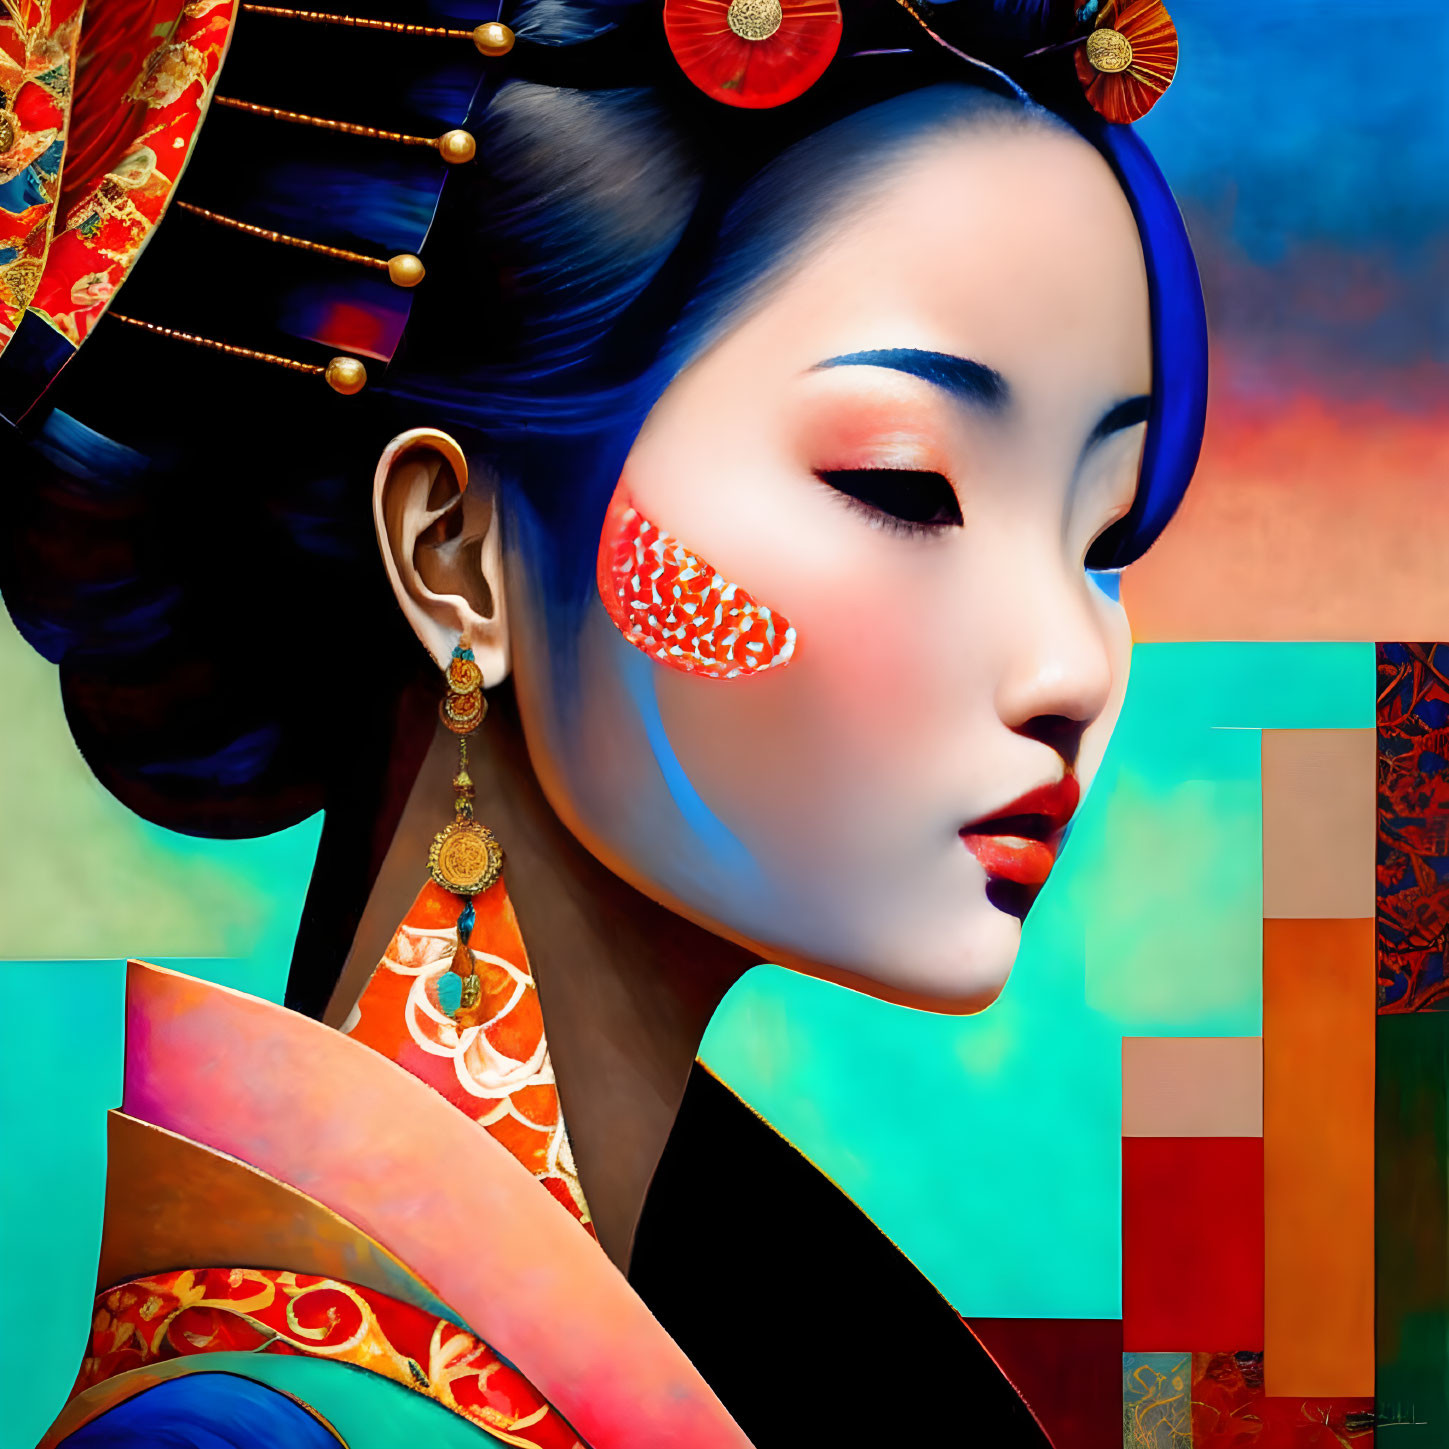 Vibrant digital portrait of stylized geisha with elaborate hair ornaments